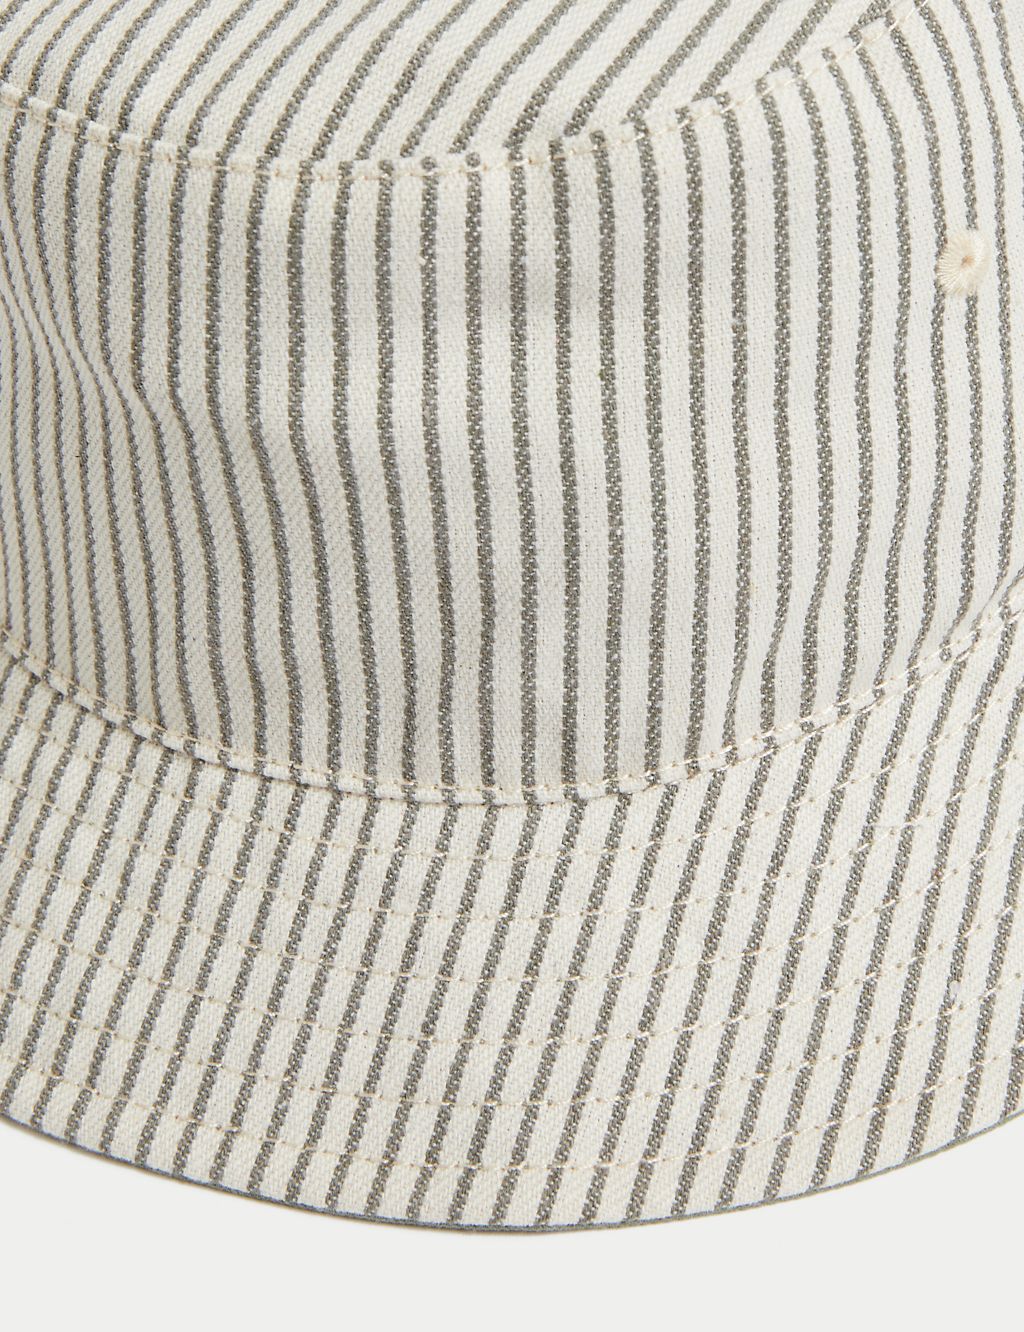 Kids' Pure Cotton Striped Sun Hat (1-6 Yrs) 2 of 3